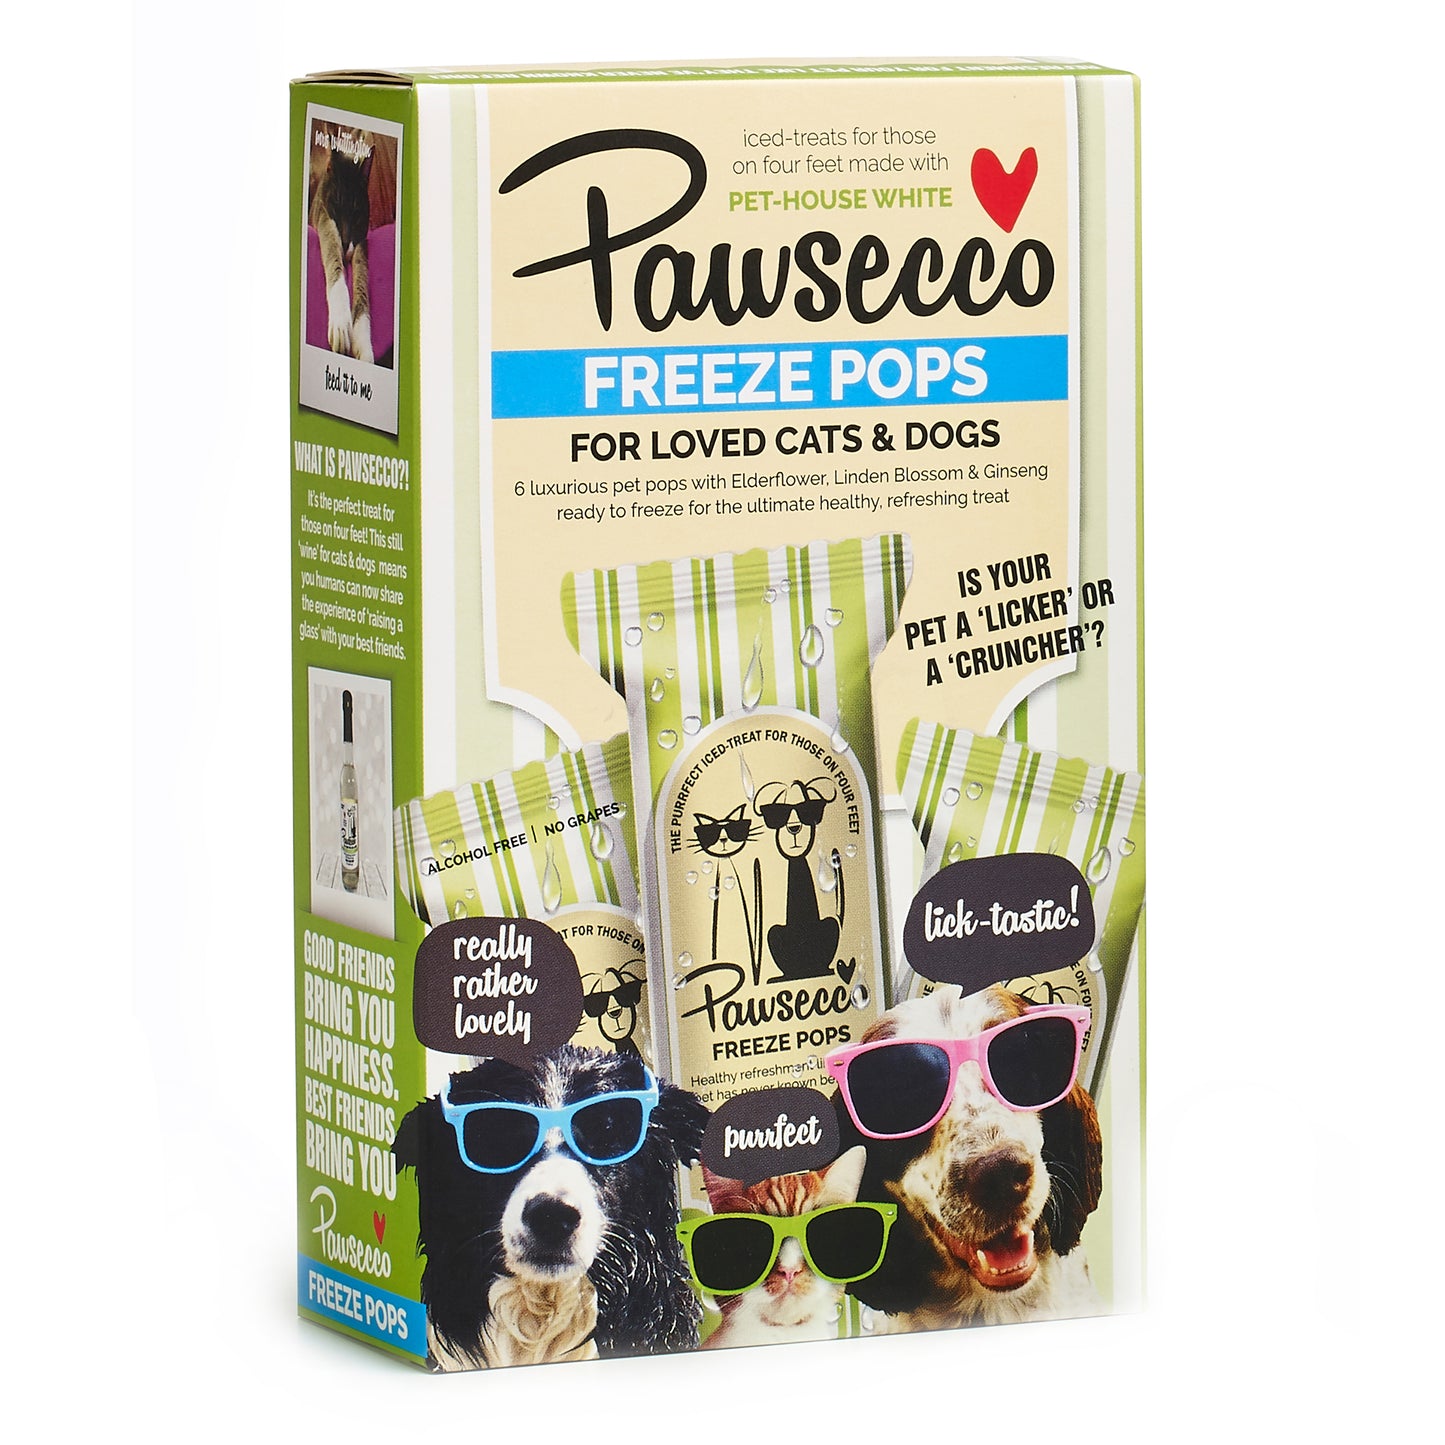 Pawsecco Freeze Pops Cat & Dog Treat